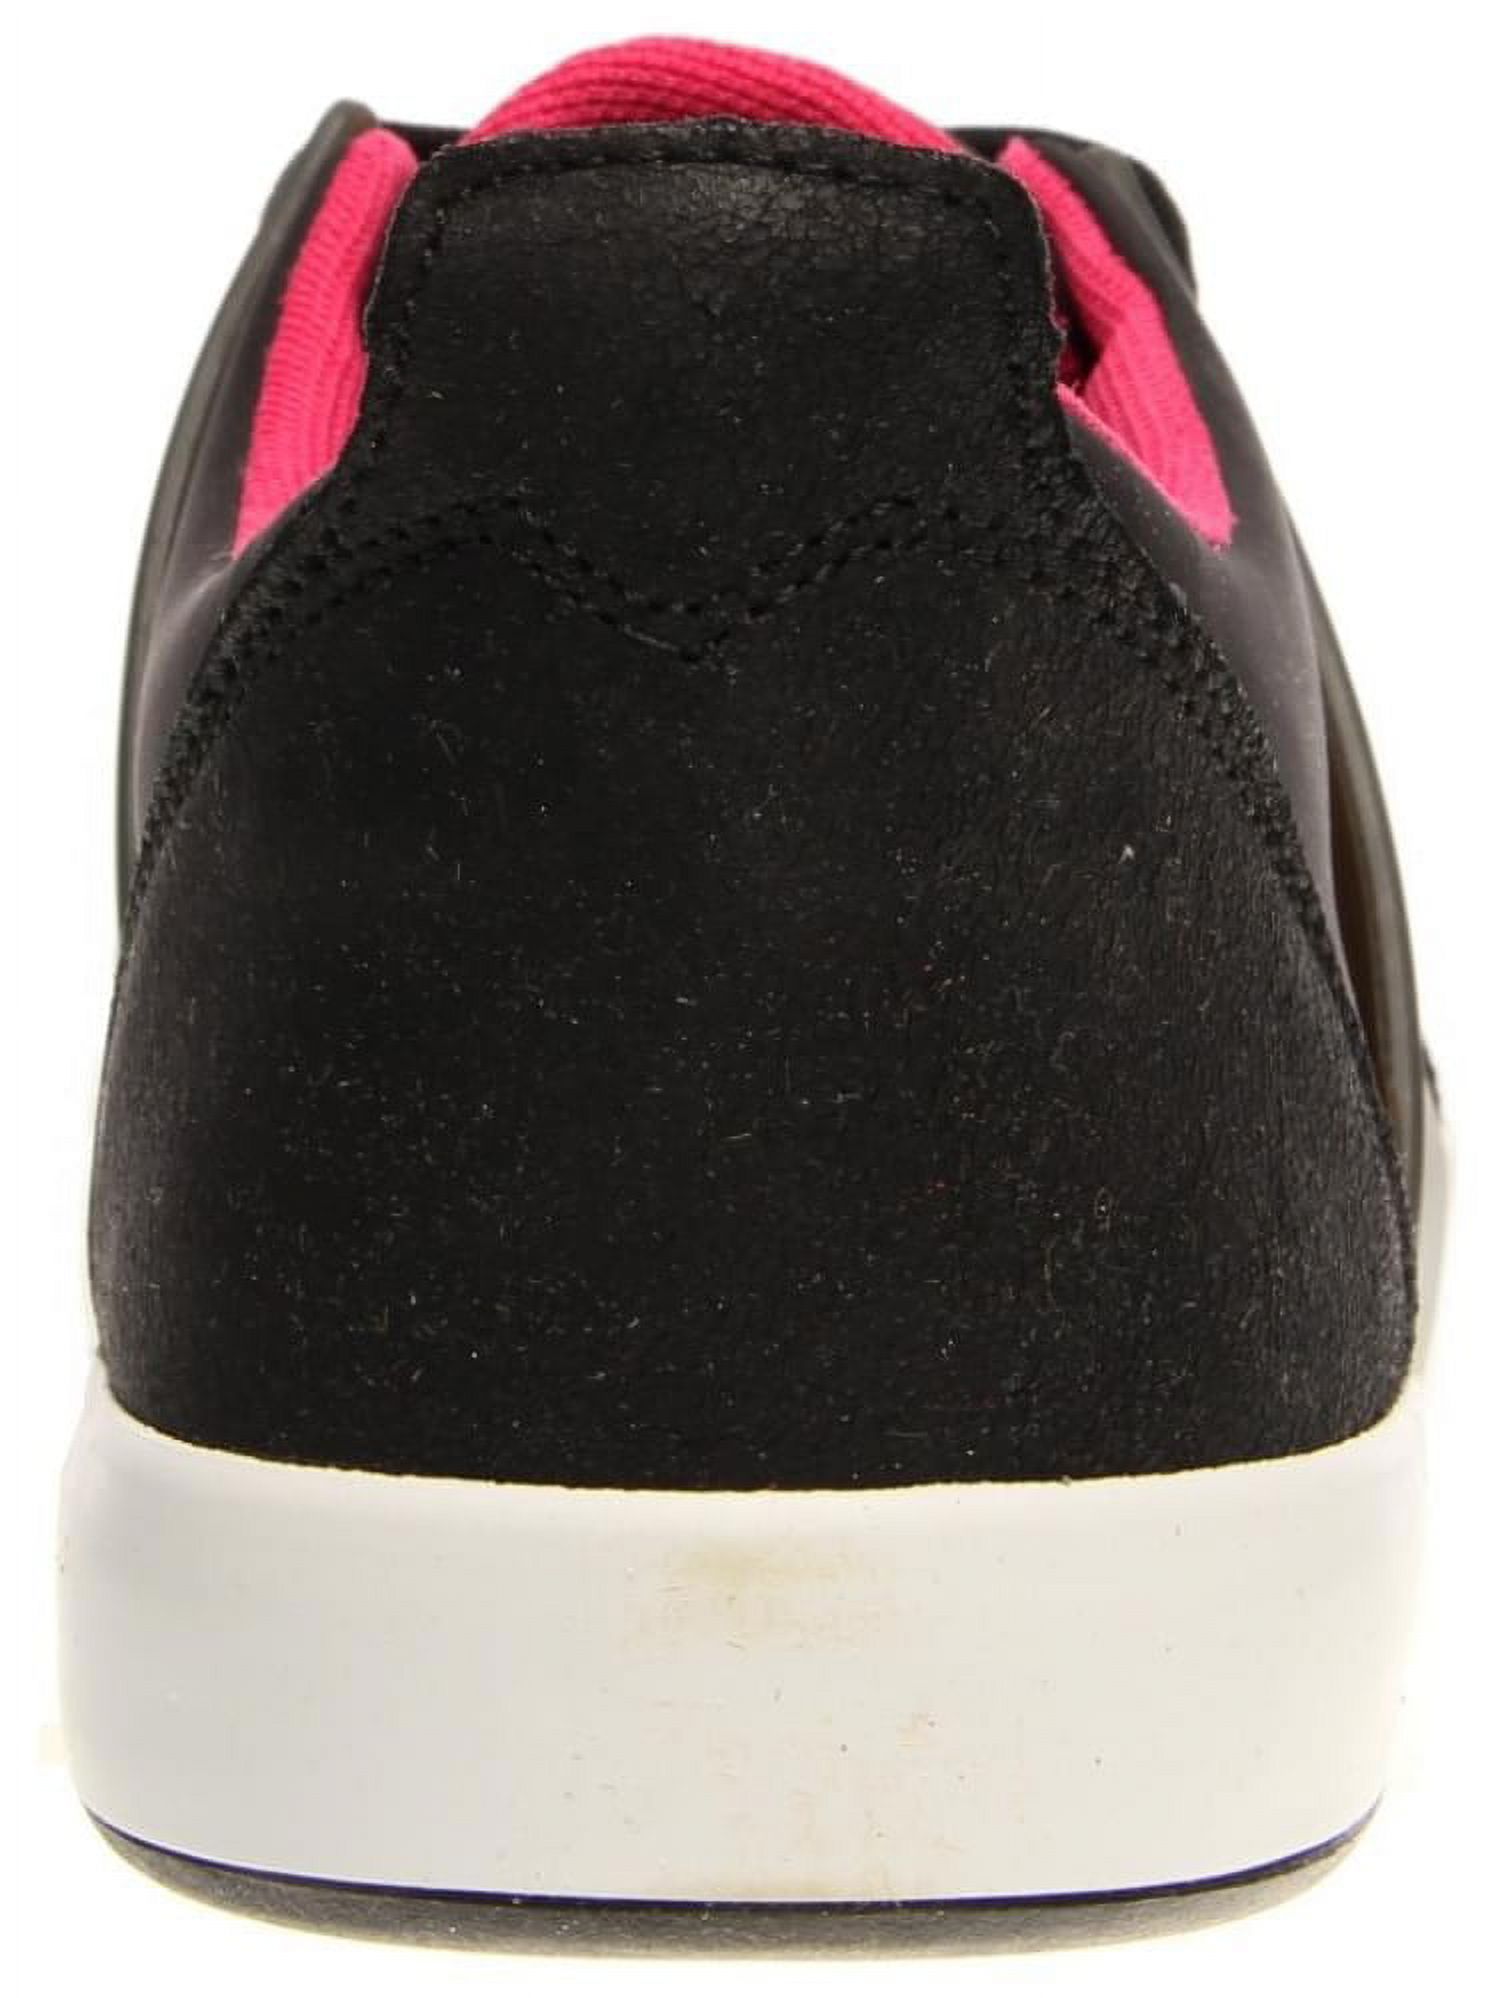 PUMA Men's EL Ace 3 Lo Dip Dye Classic Sneakers Shoes, Black / Beetroot Purple - image 3 of 7